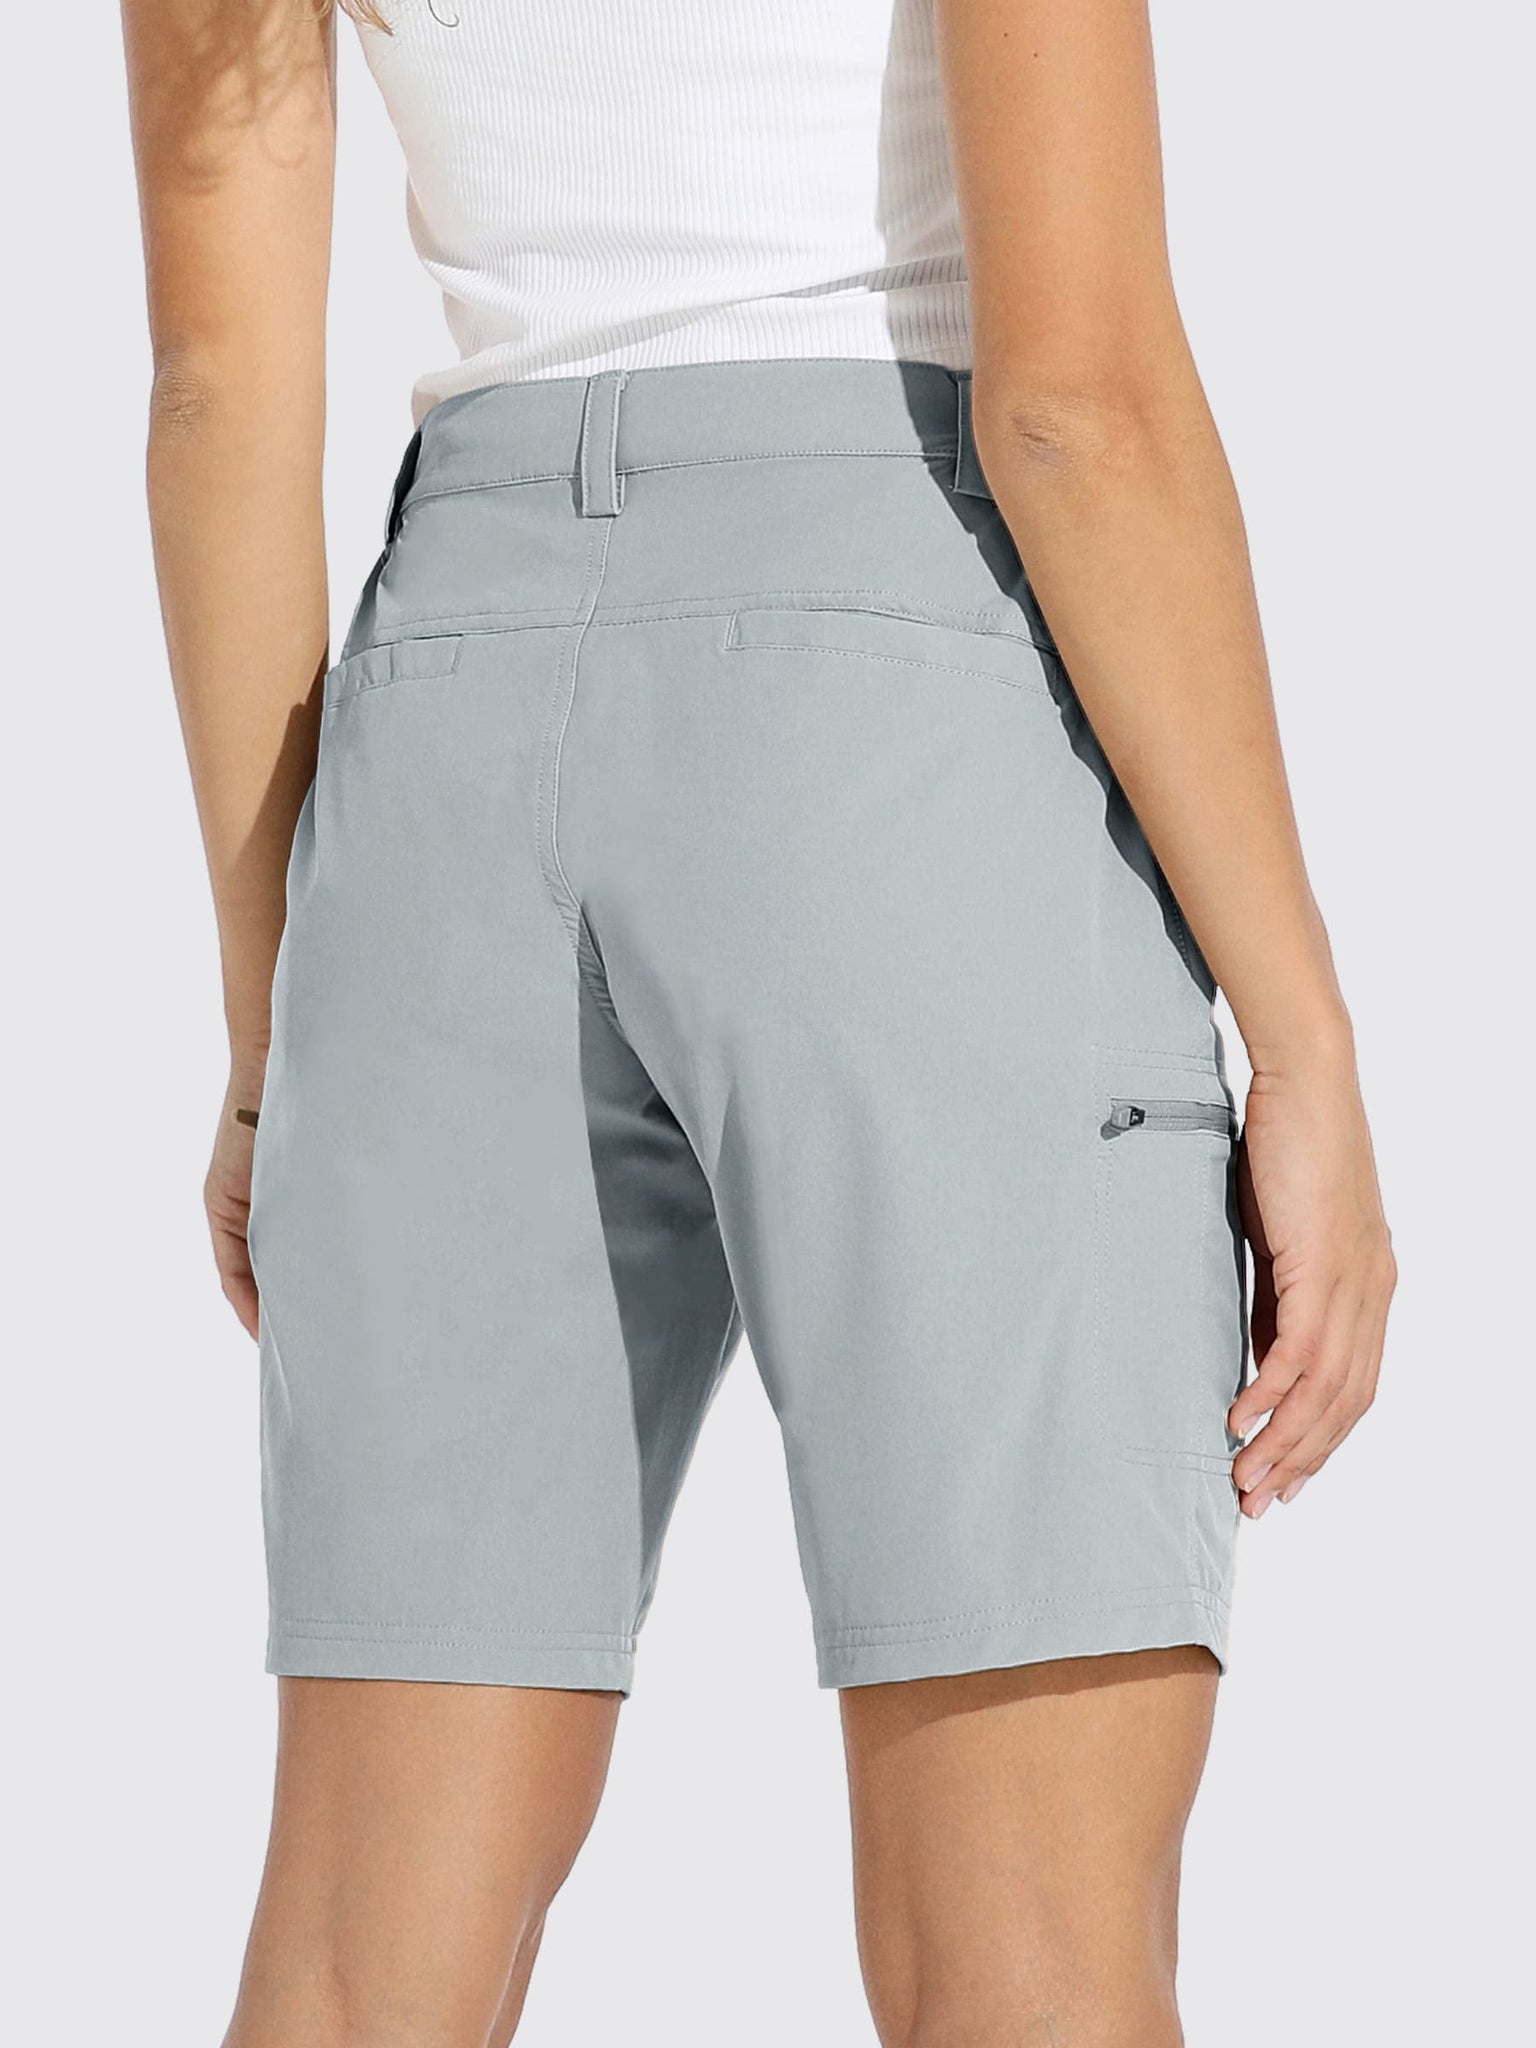 Womens Under $70 Hiking Shorts.